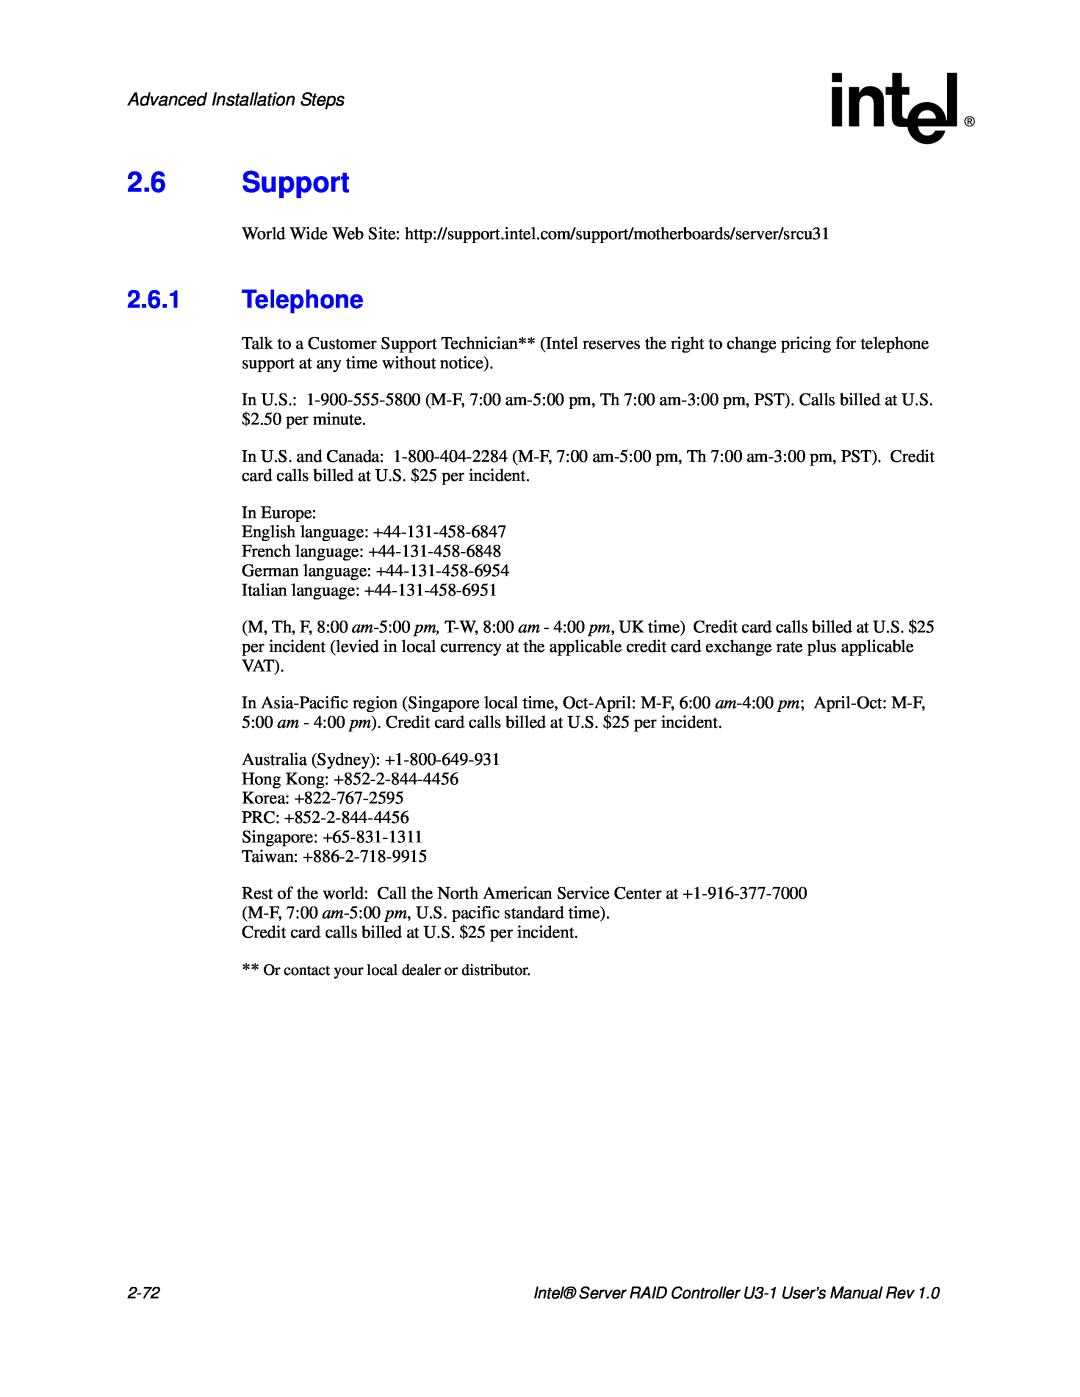 Intel SRCU31 user manual 2.6Support, 2.6.1Telephone, Advanced Installation Steps 